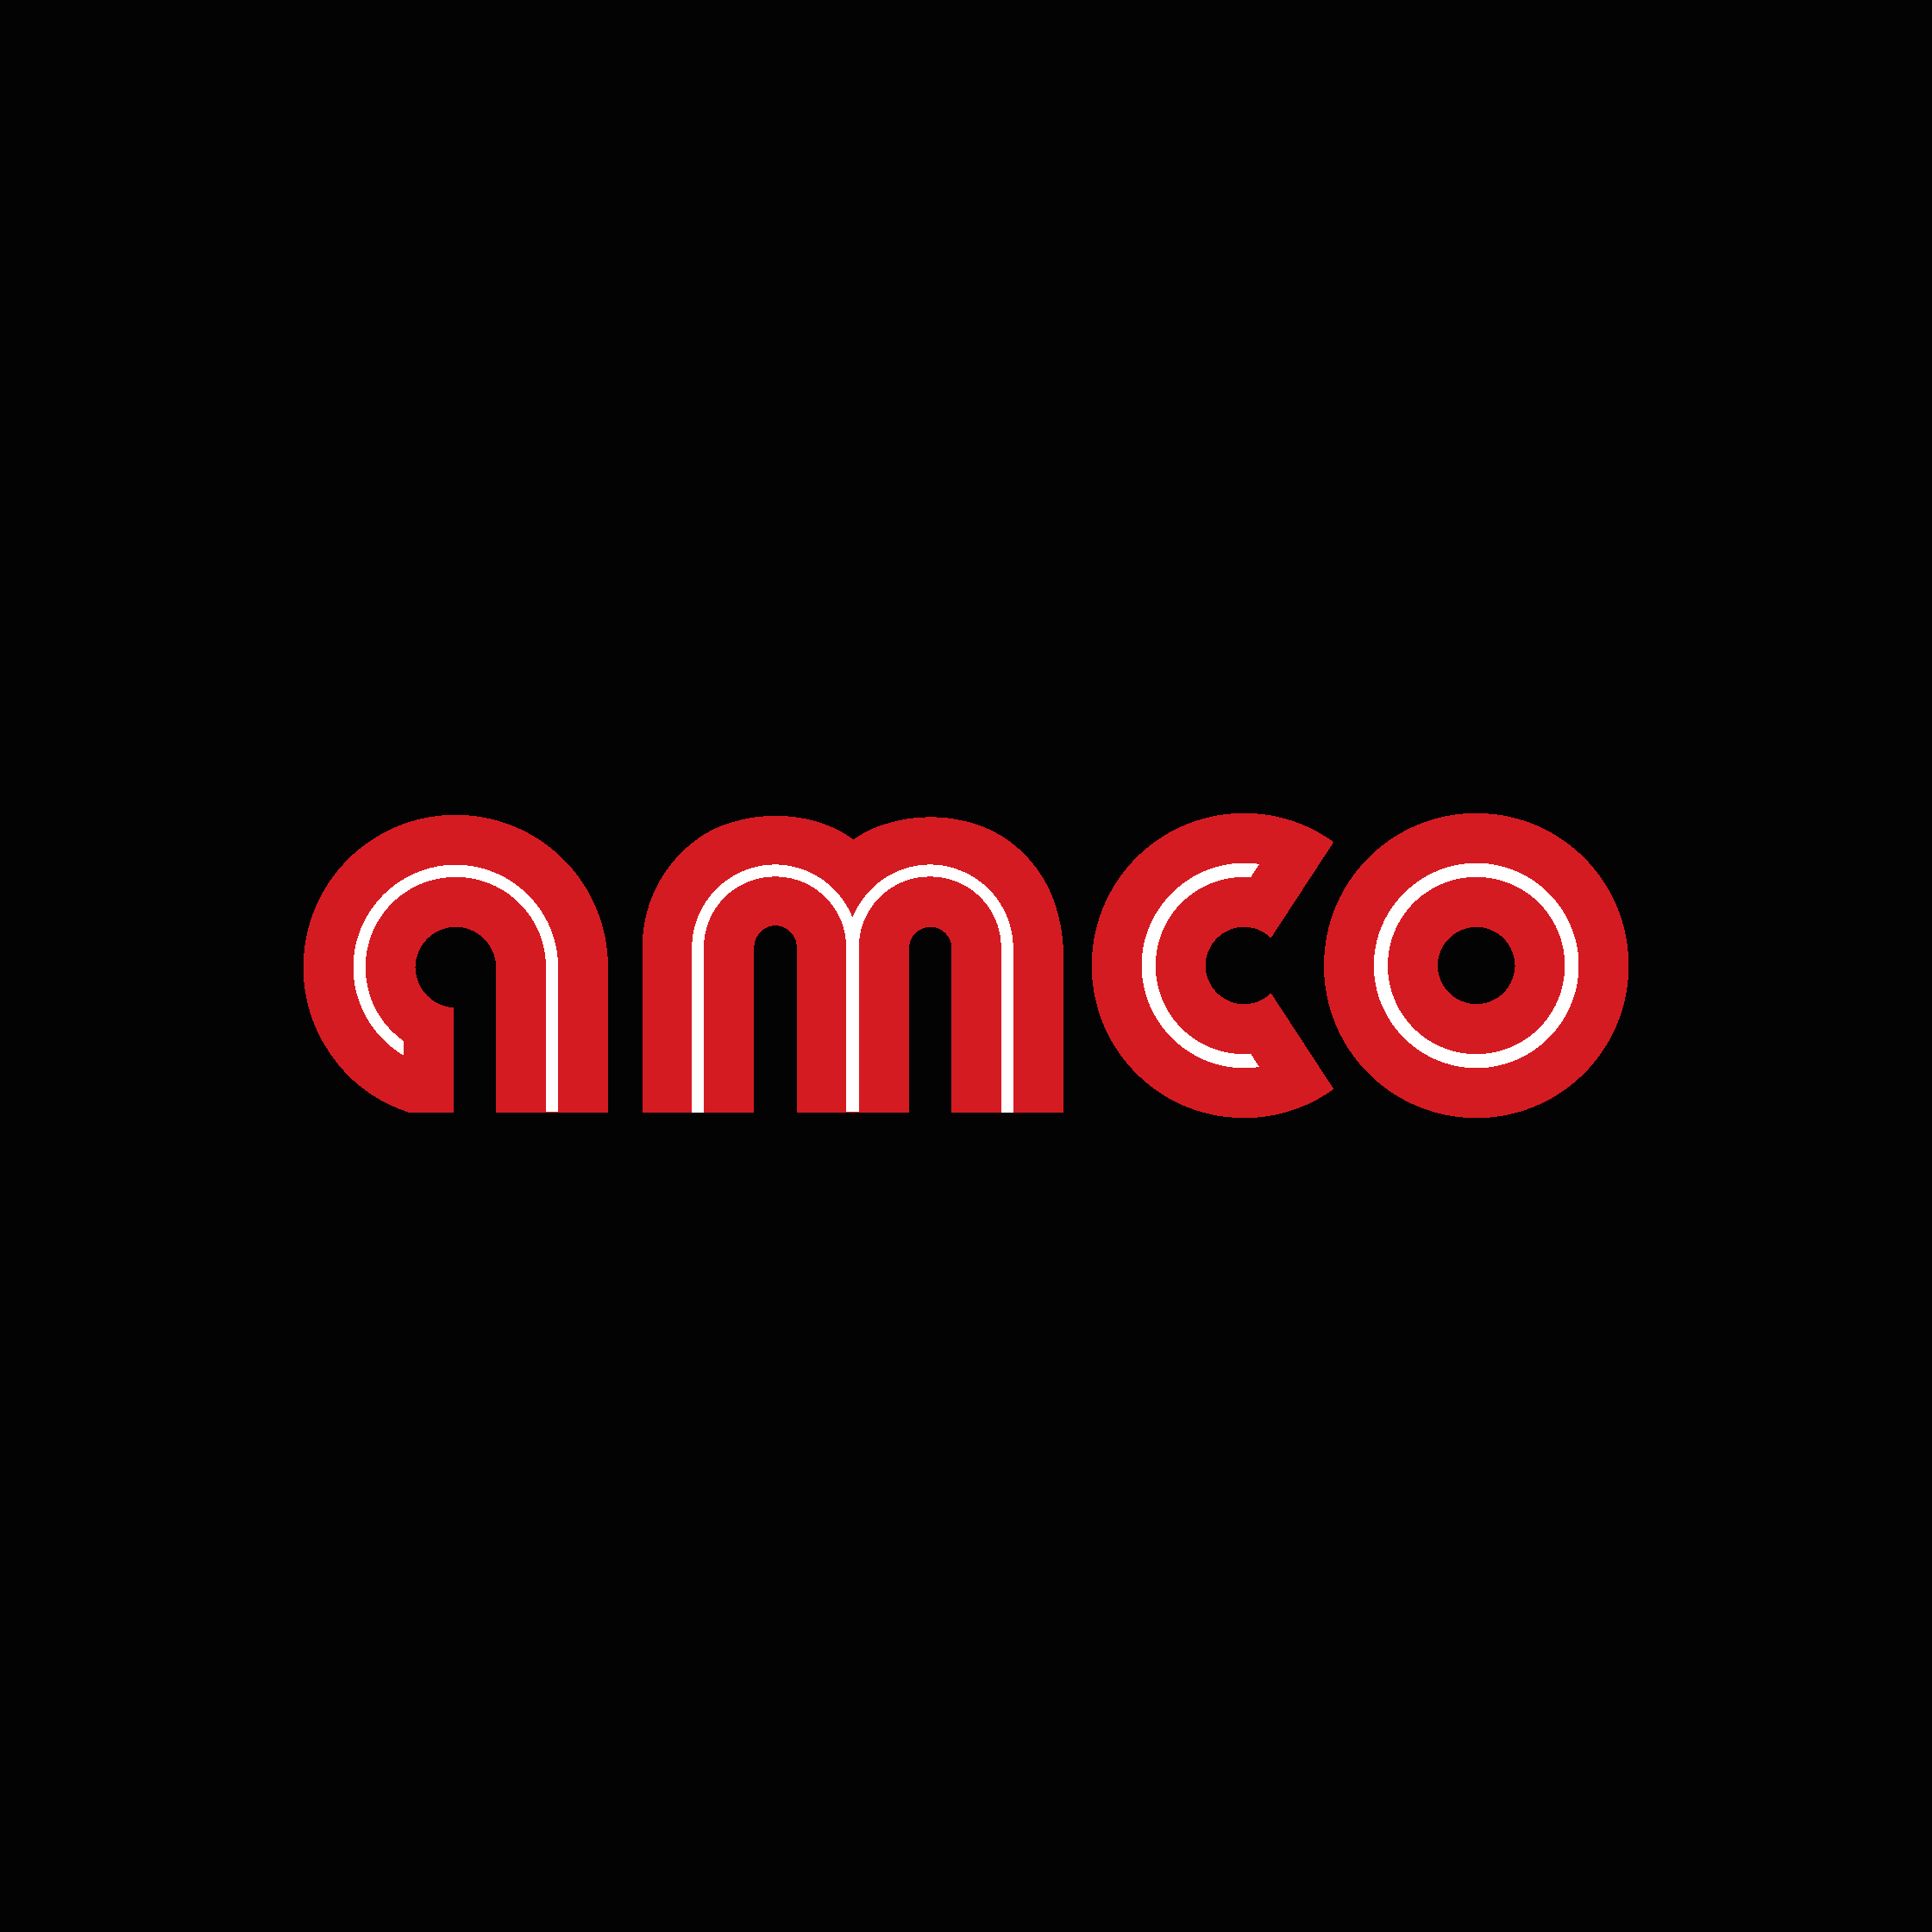 AMCO Group